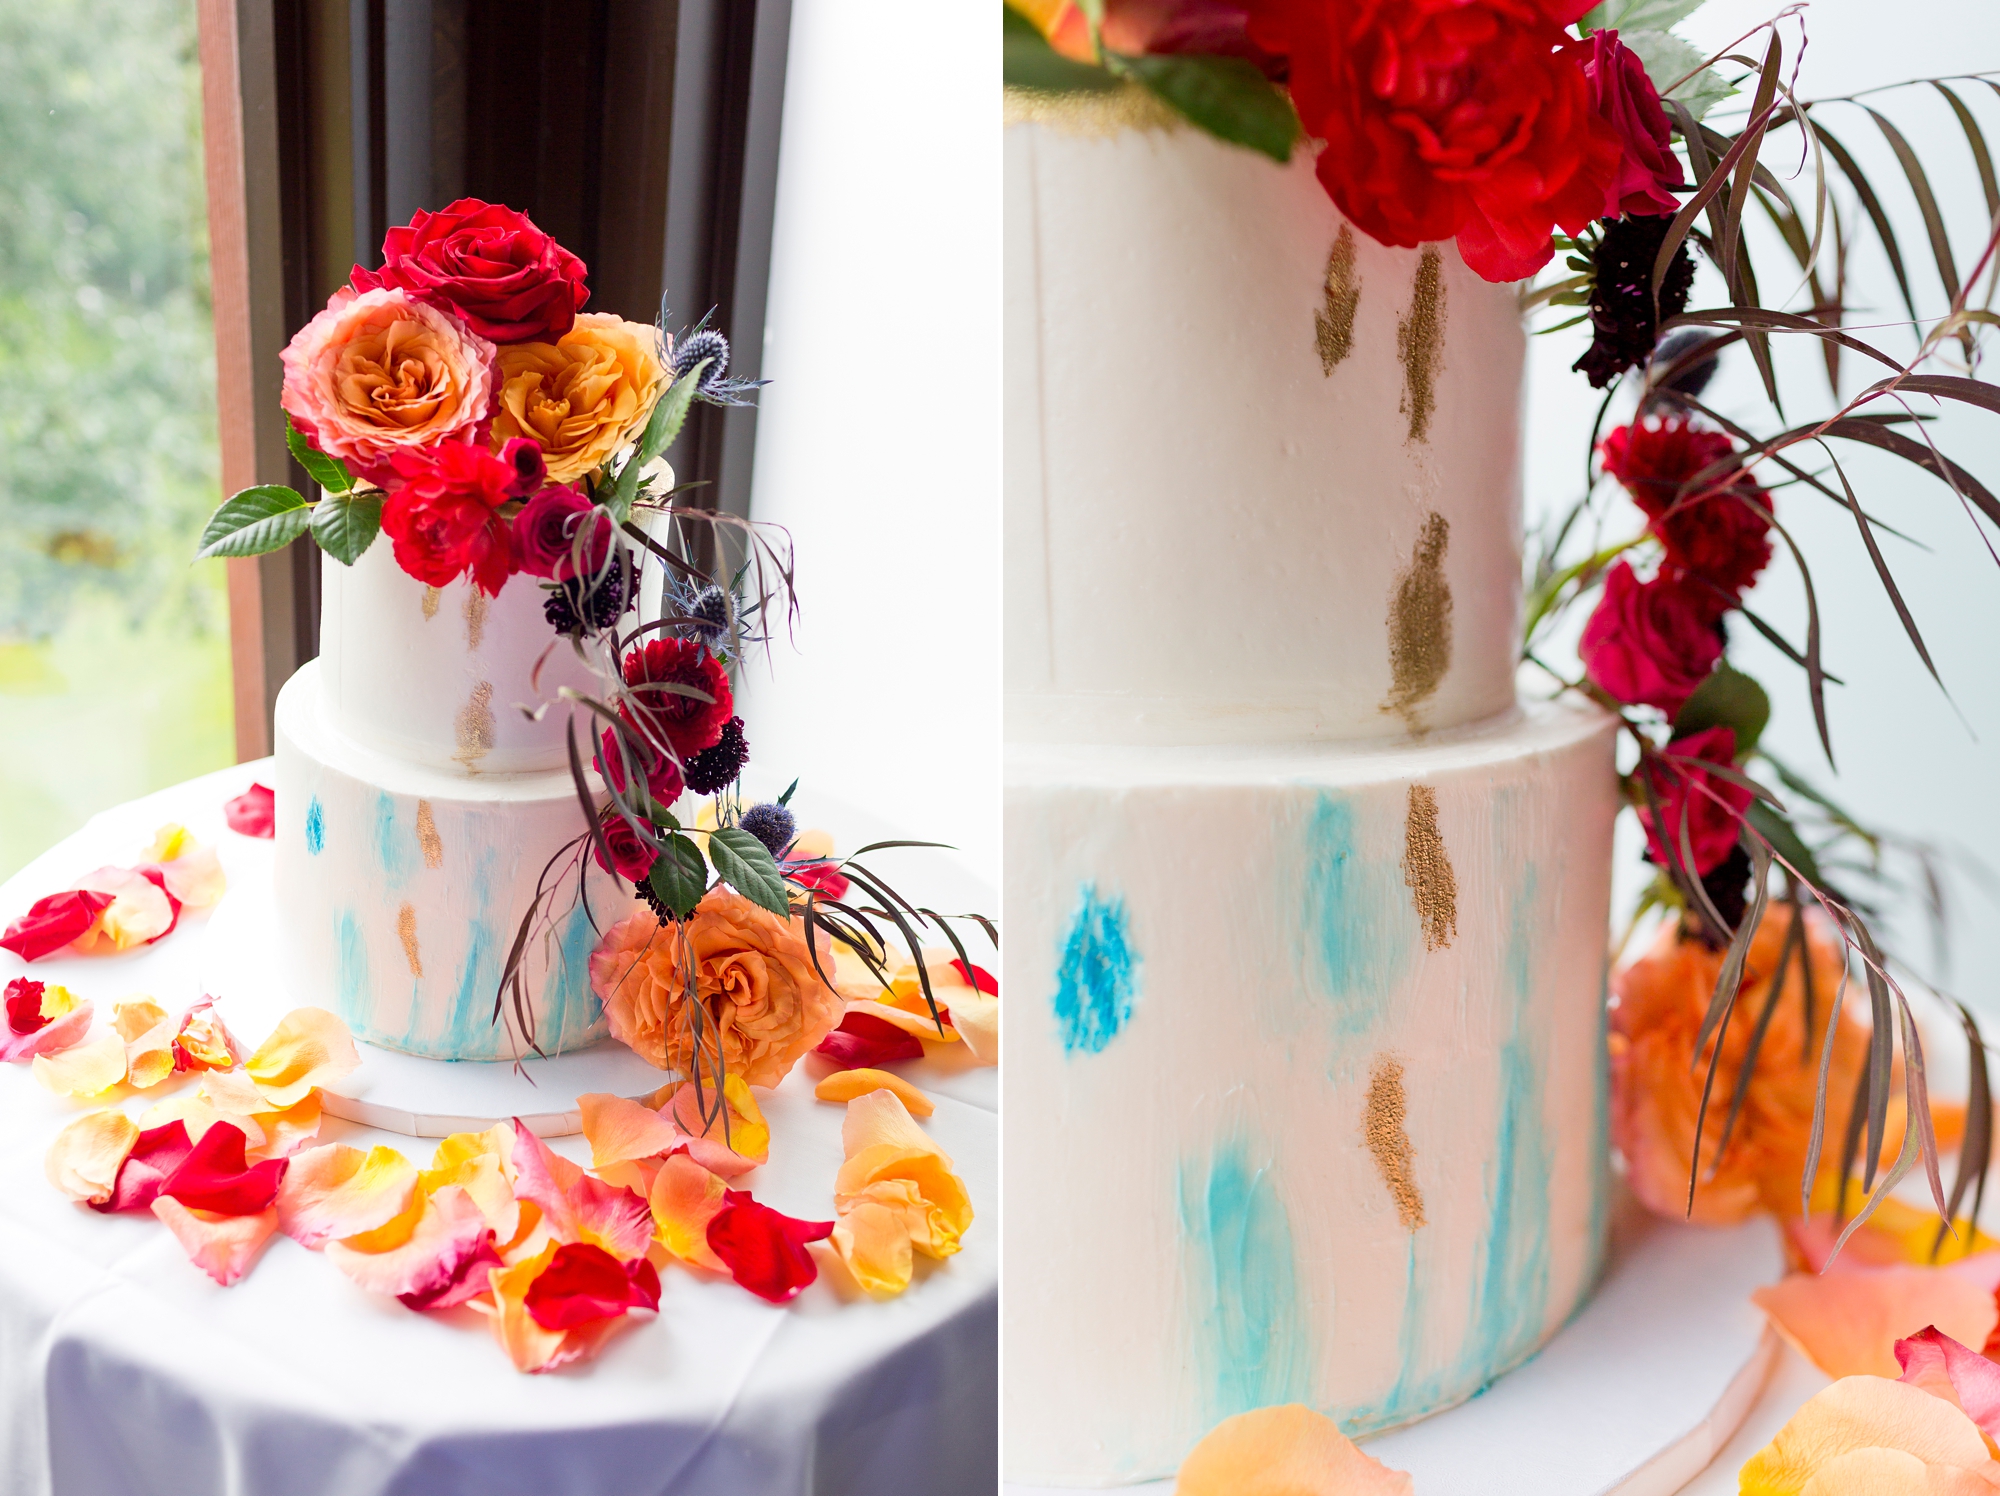 2 tier round wedding cake with jewel toned flowers